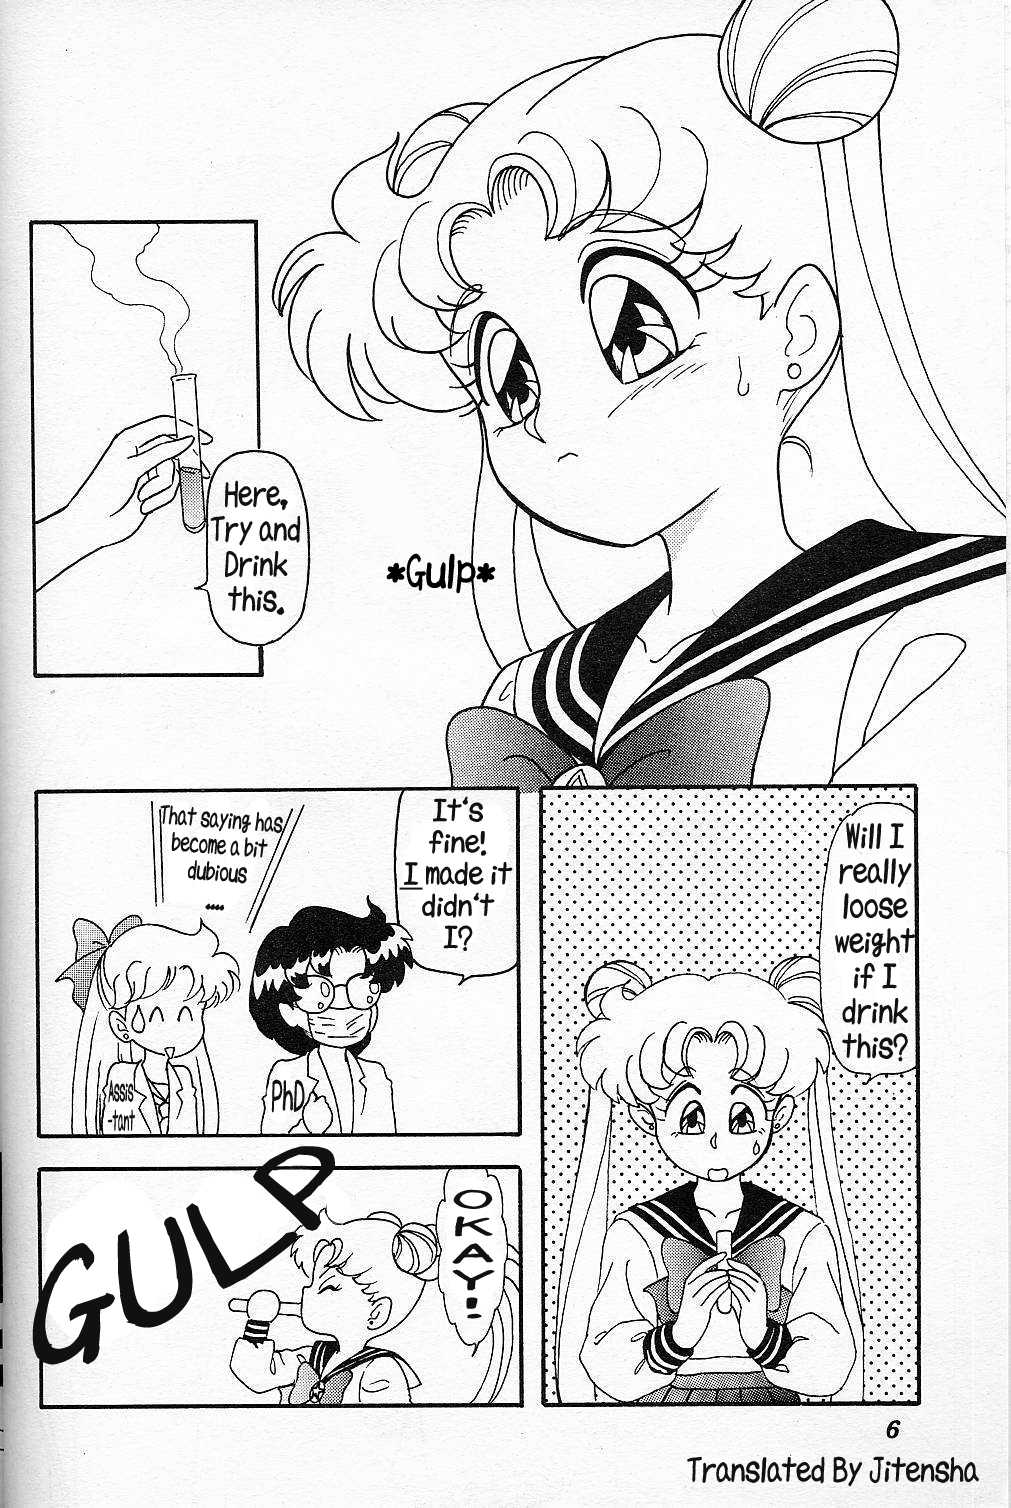 Lunch Box 6 (Sailor Moon) 